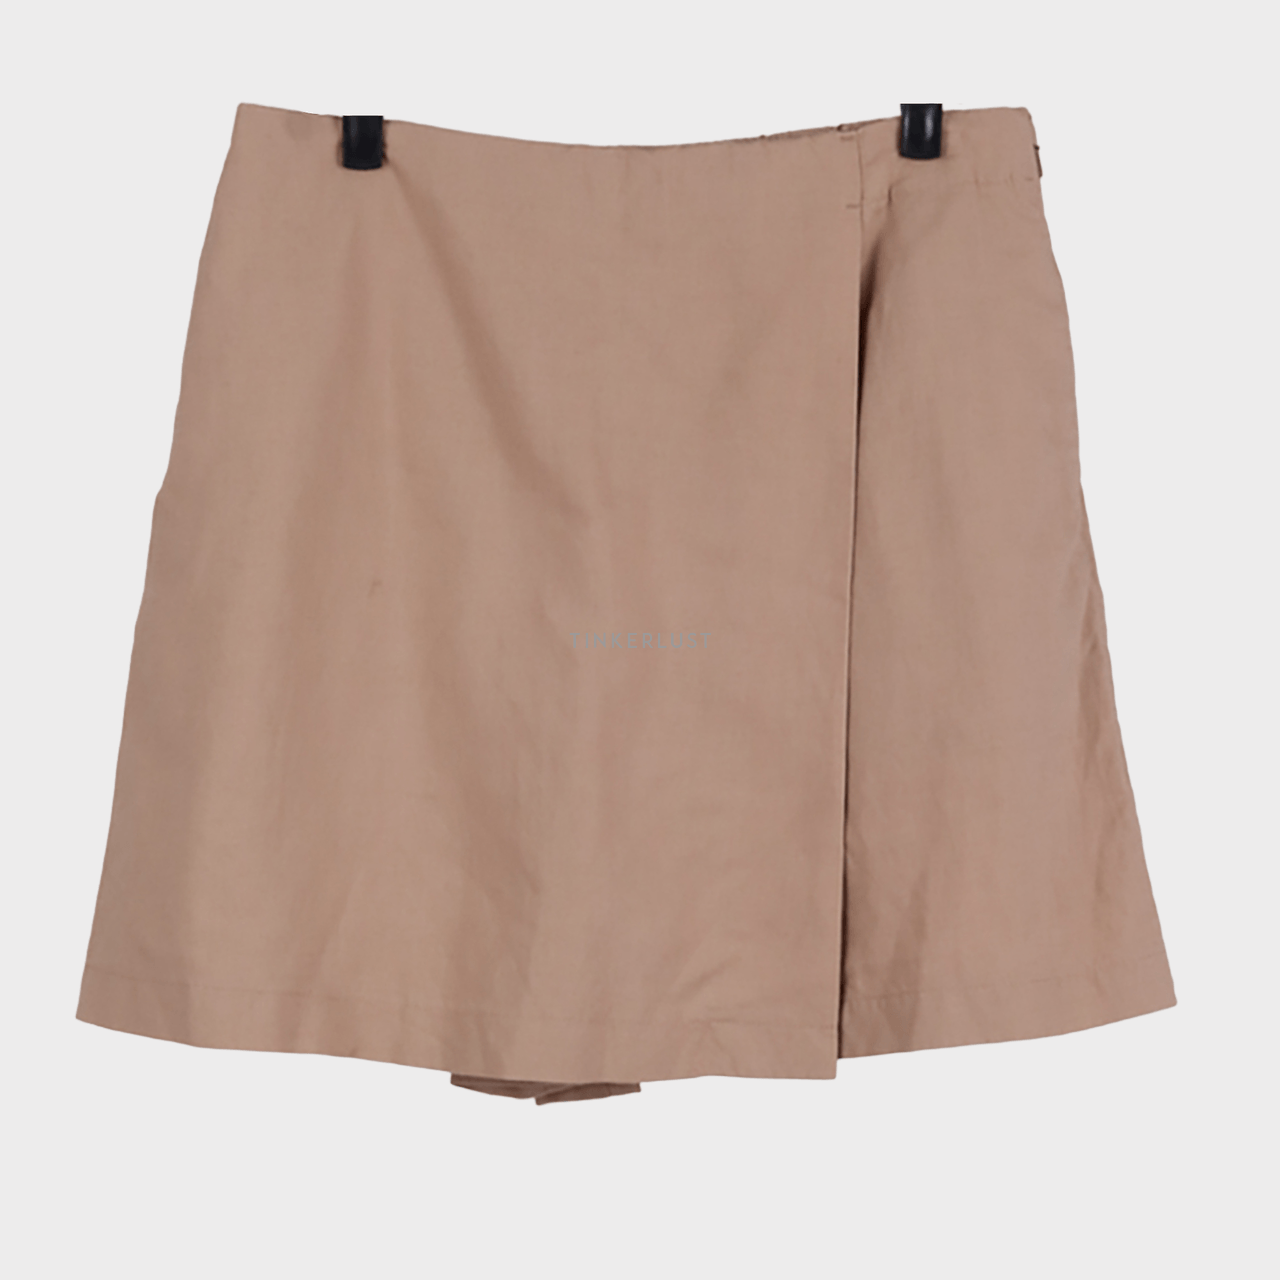 UNIQLO Tan Skirt